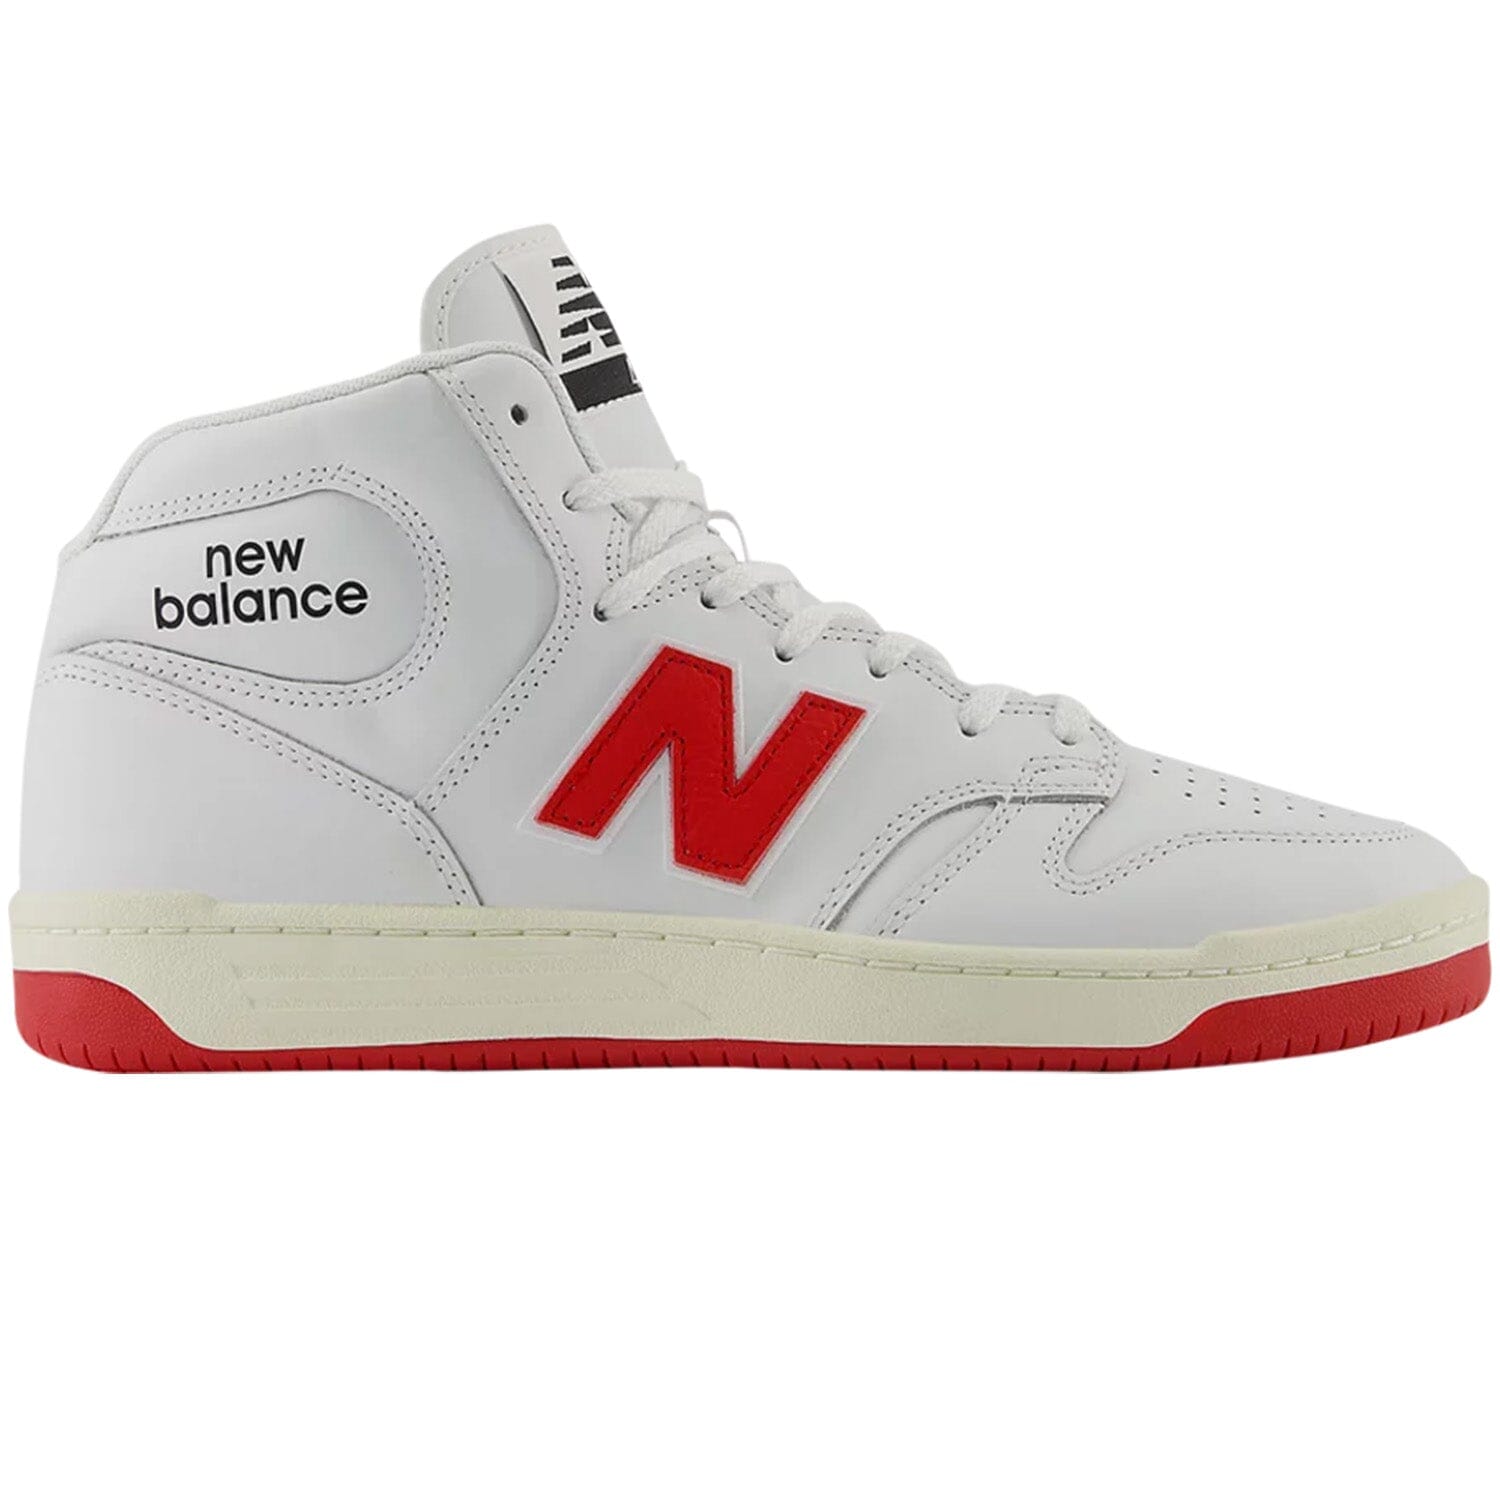 New Balance Numeric NM480 High White/Varsity Red footwear New Balance Numeric 